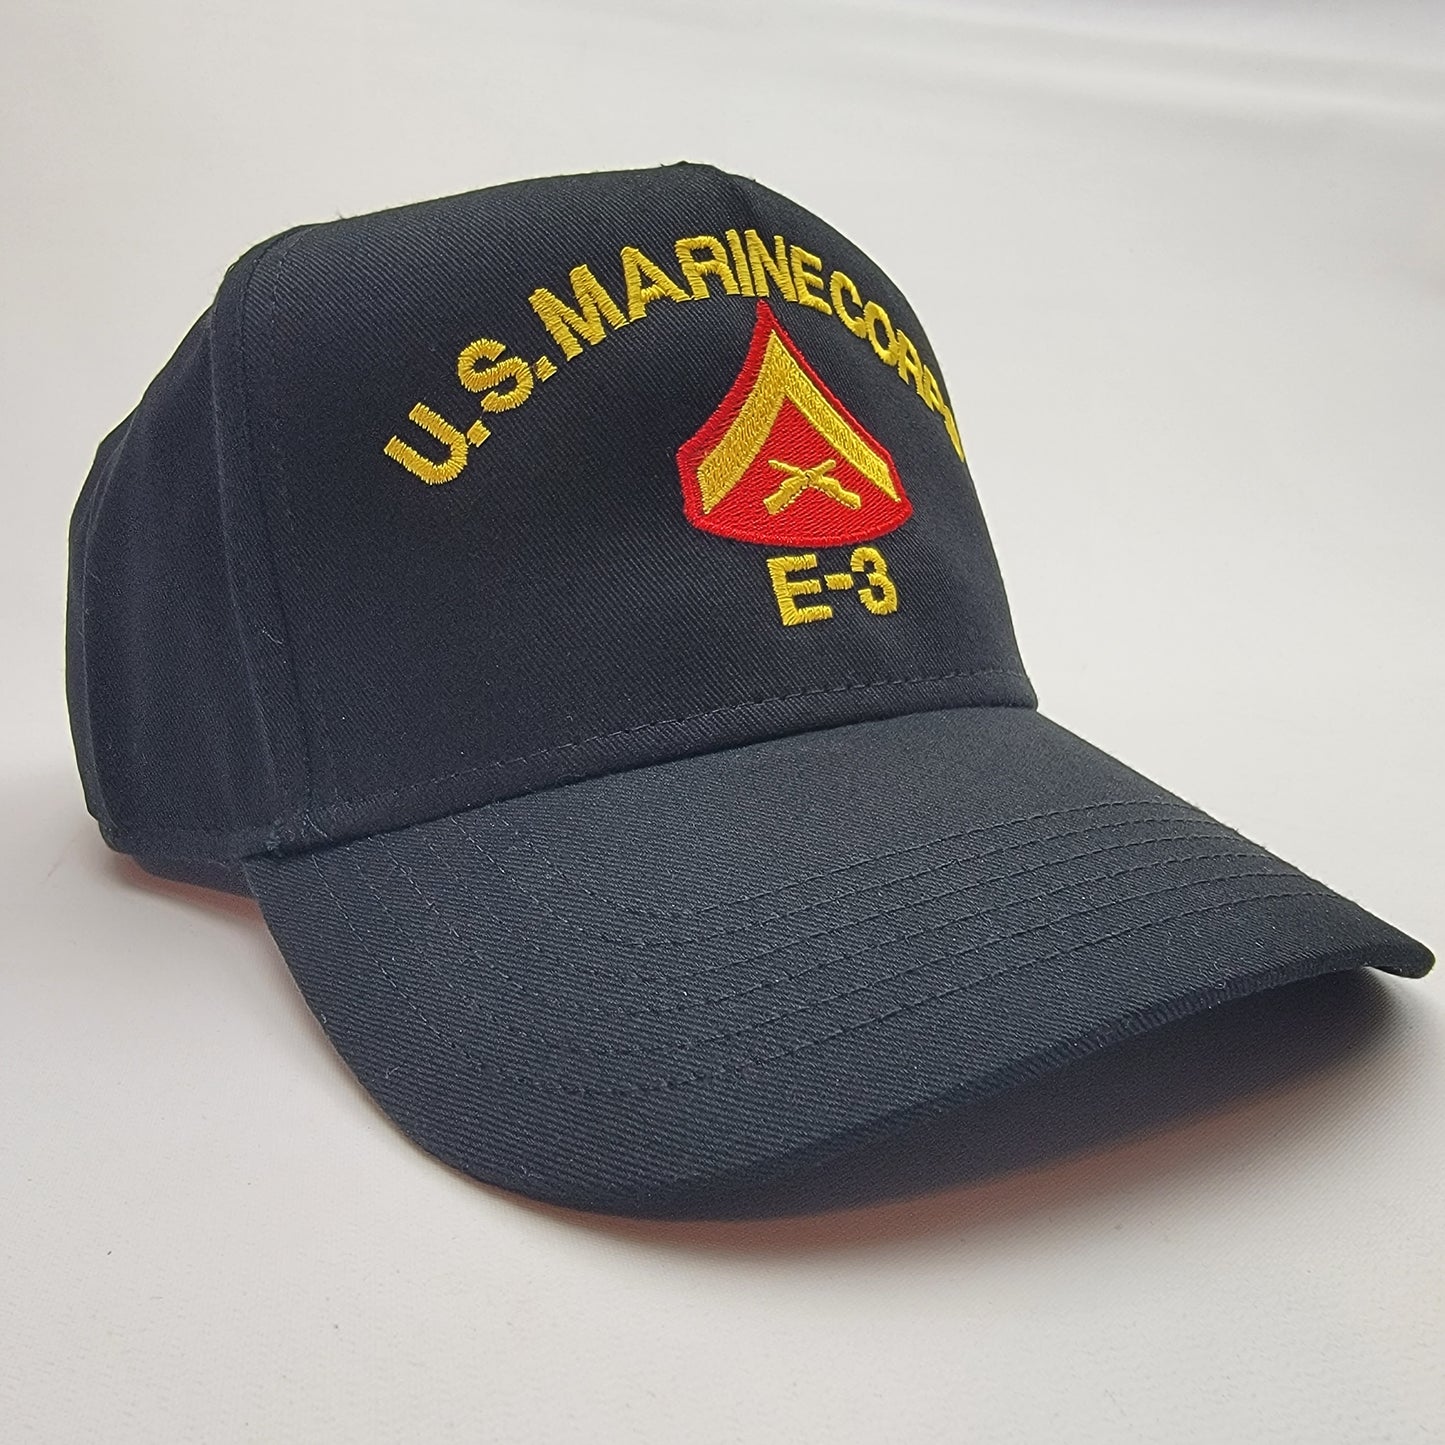 Lance Corporal E-3 Insignia Rank Baseball Cap Hat Embroidered Military Marine Black Cotton Curved Bill Strapback